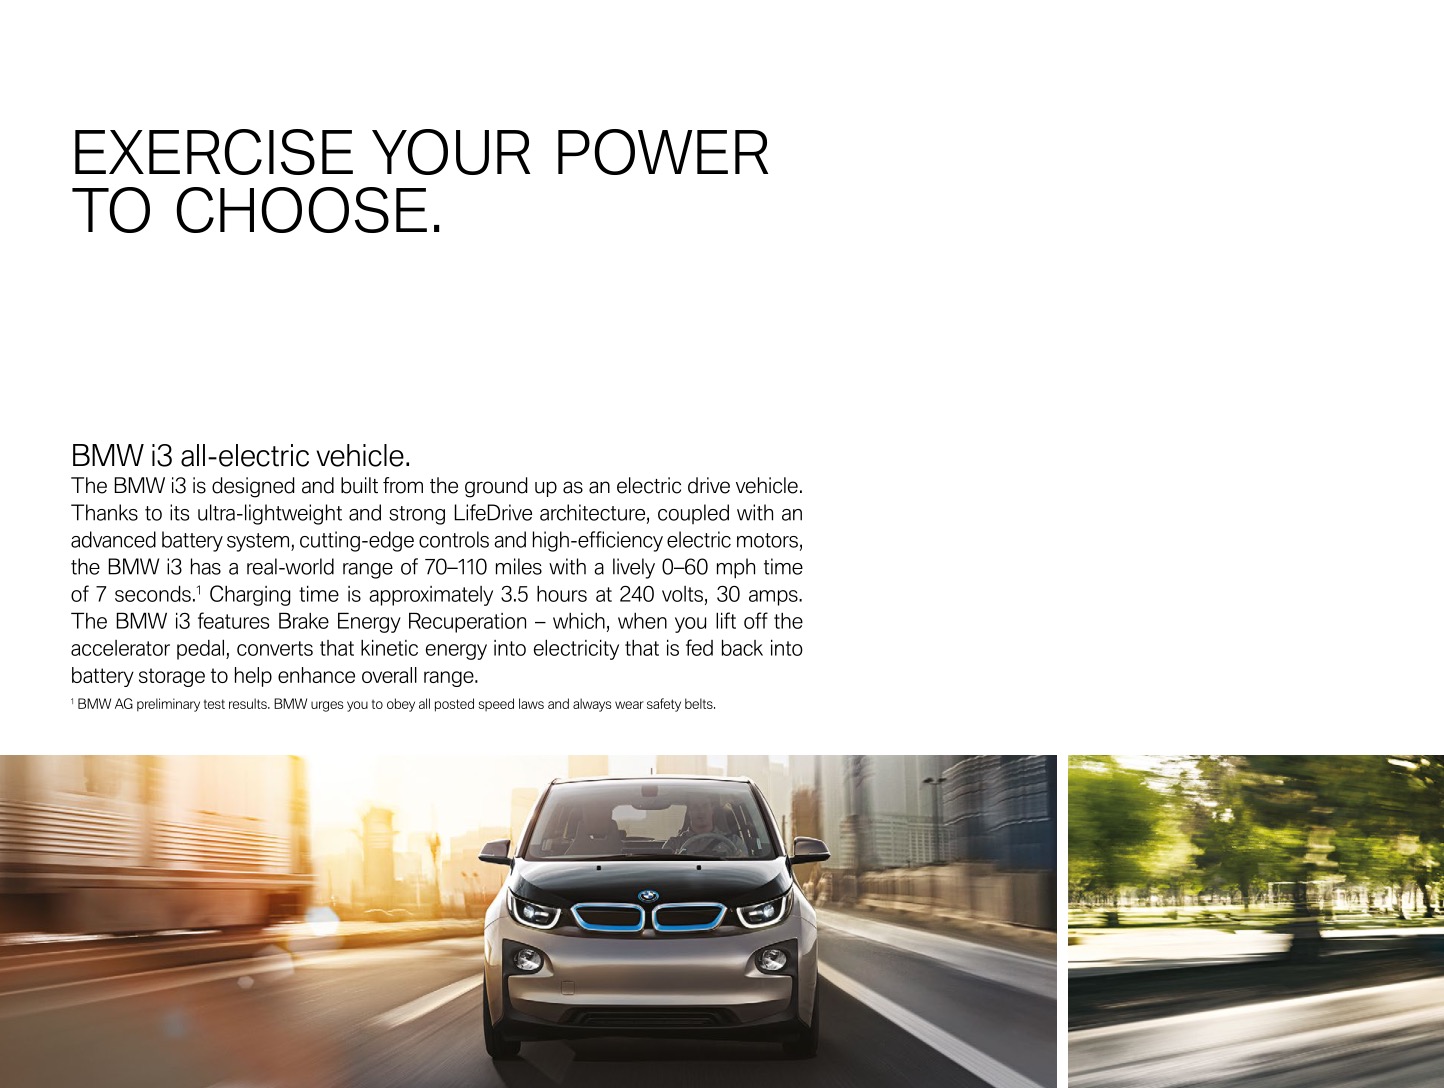 2014 BMW iSeries Brochure Page 3